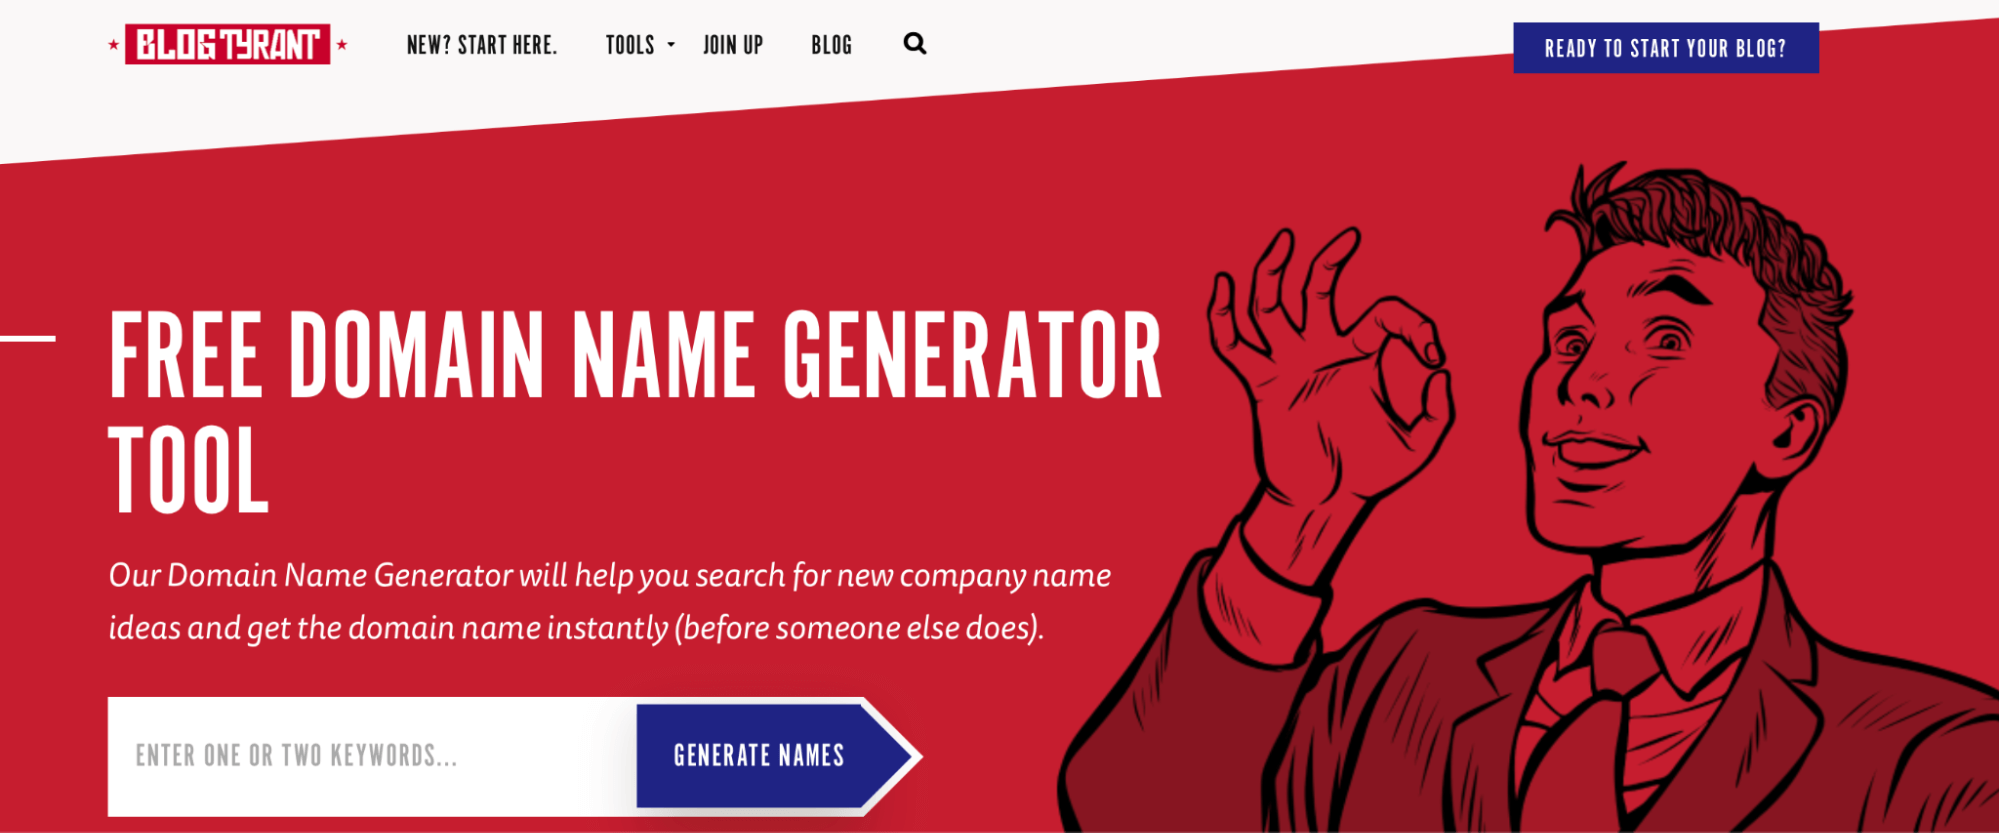 Blog Tyrant free domain name generator